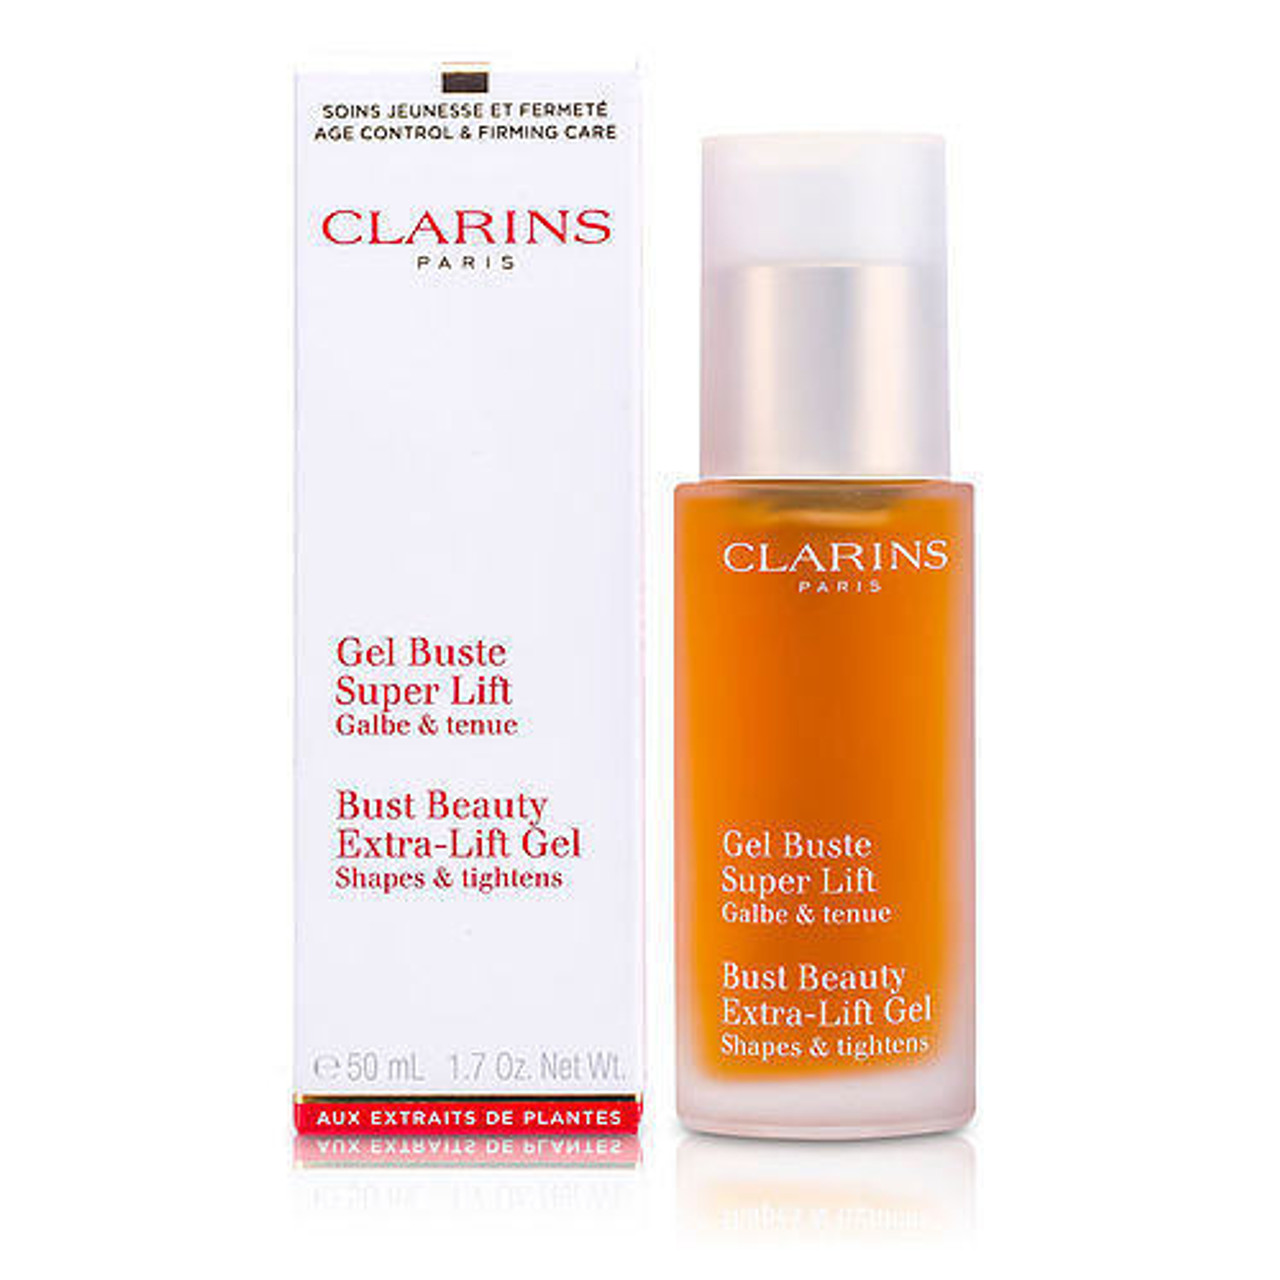 Clarins Bust Beauty Extra-Lift Gel - 1.7oz